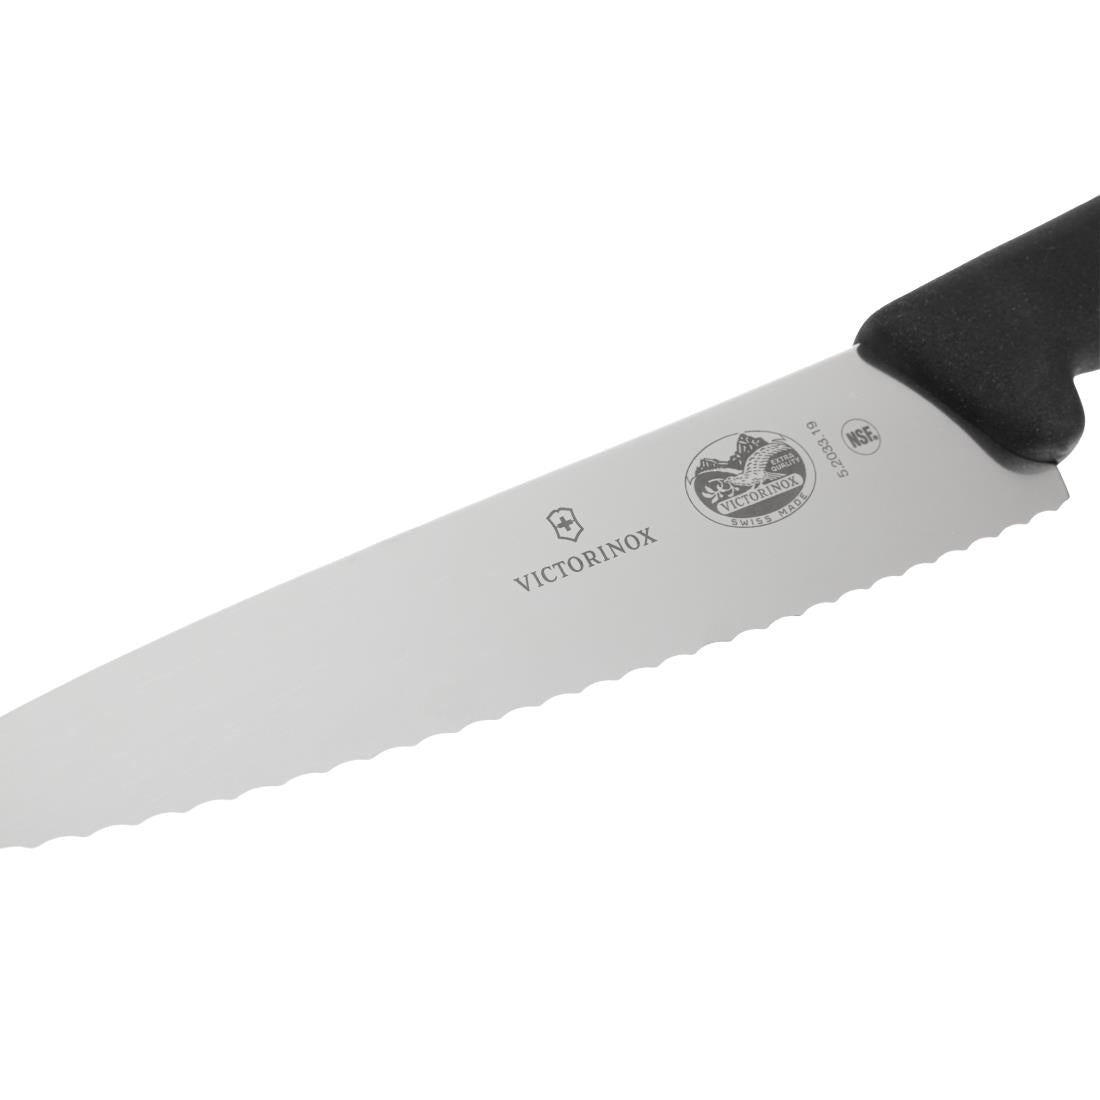 Victorinox Fibrox Serrated Carving Knife 19cm